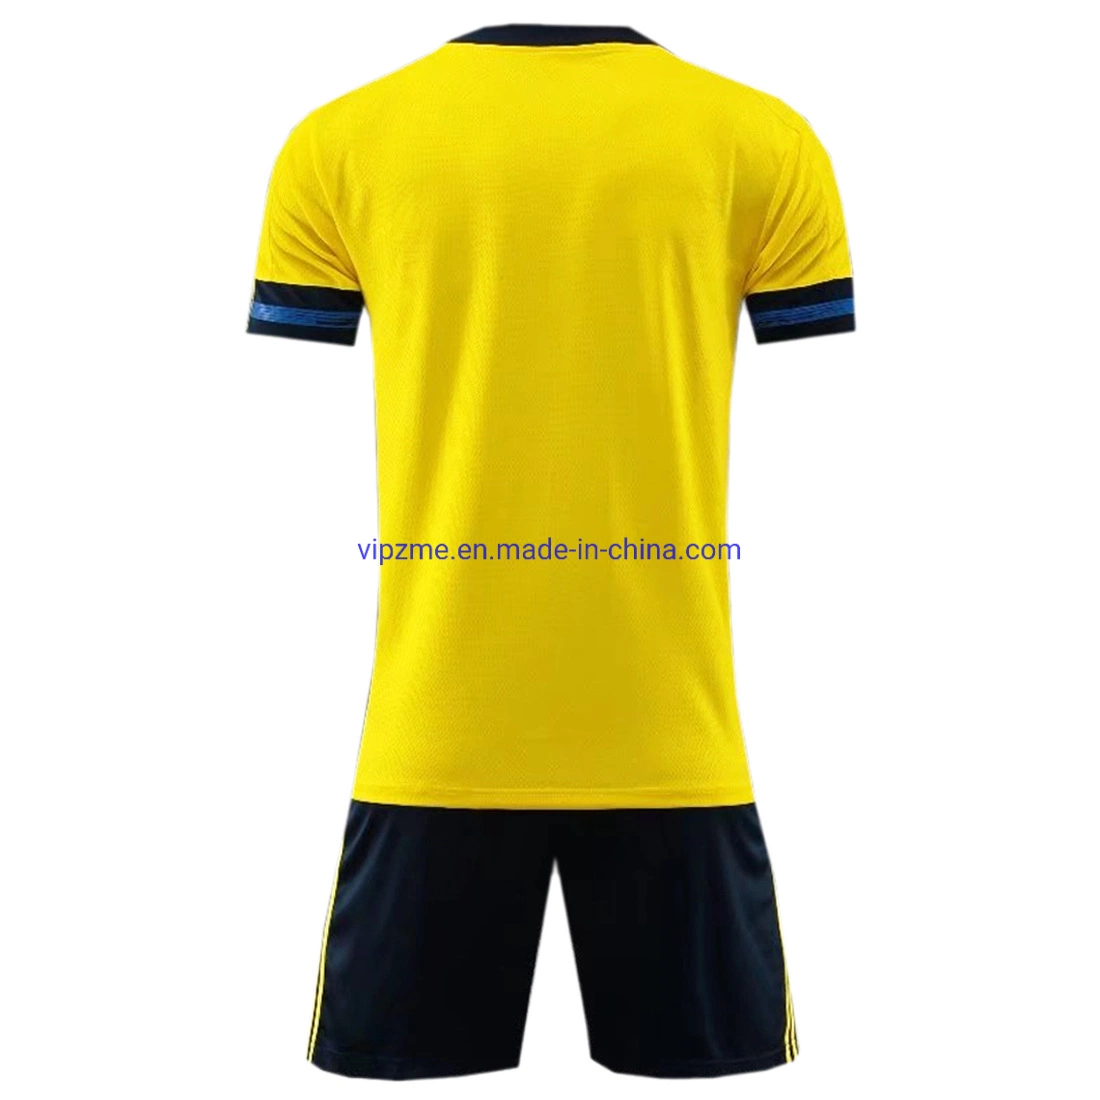 22/23 Top Thai Jersey Soccer Jersey Football Shirts Sports Wear